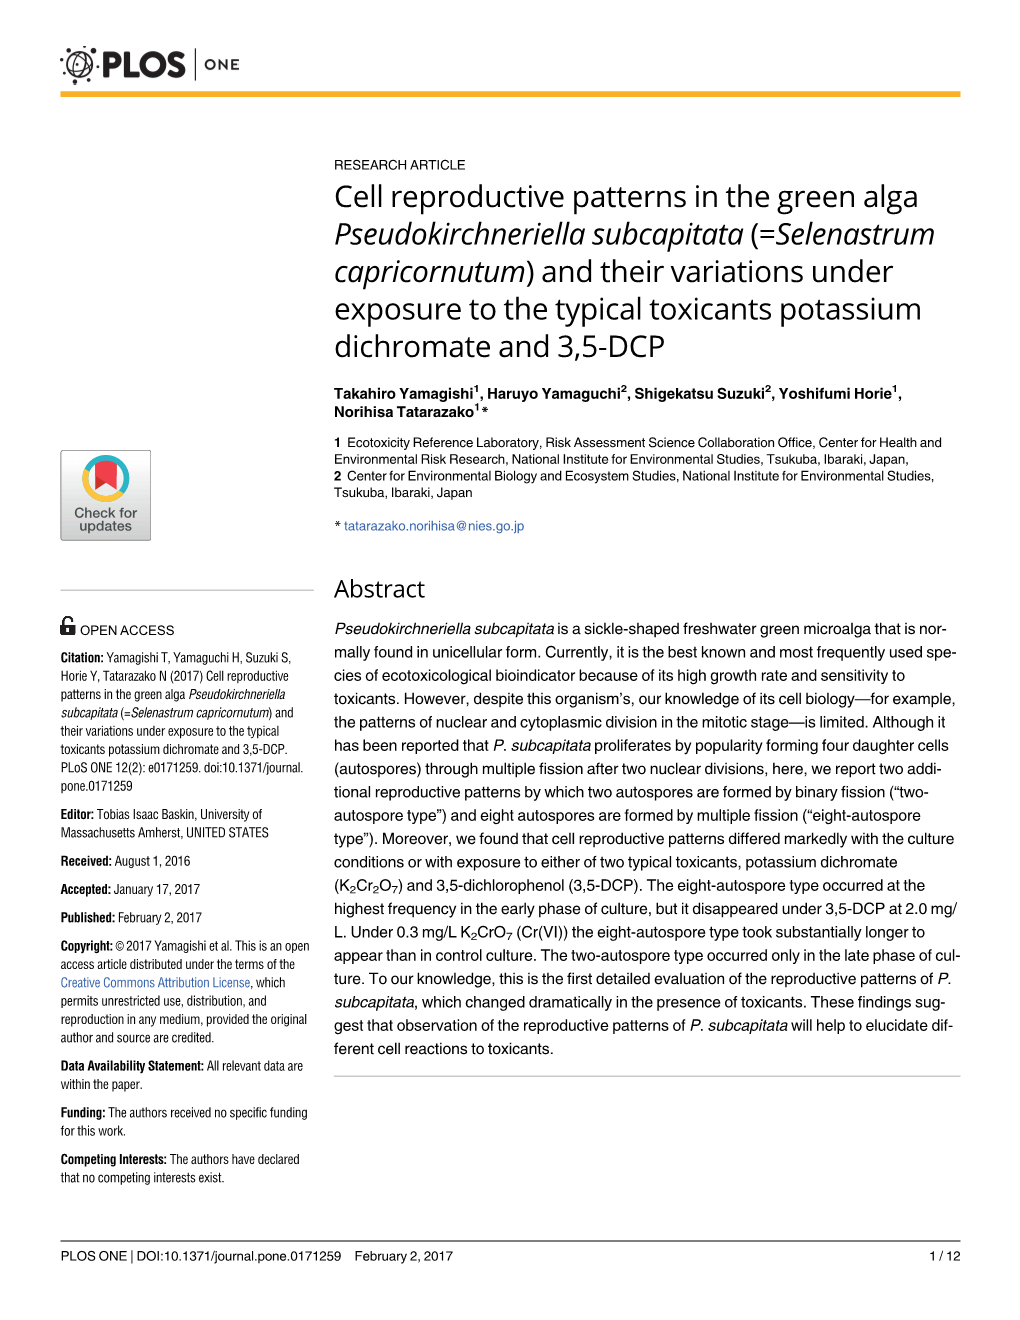 Cell Reproductive Patterns in the Green Alga Pseudokirchneriella Subcapitata